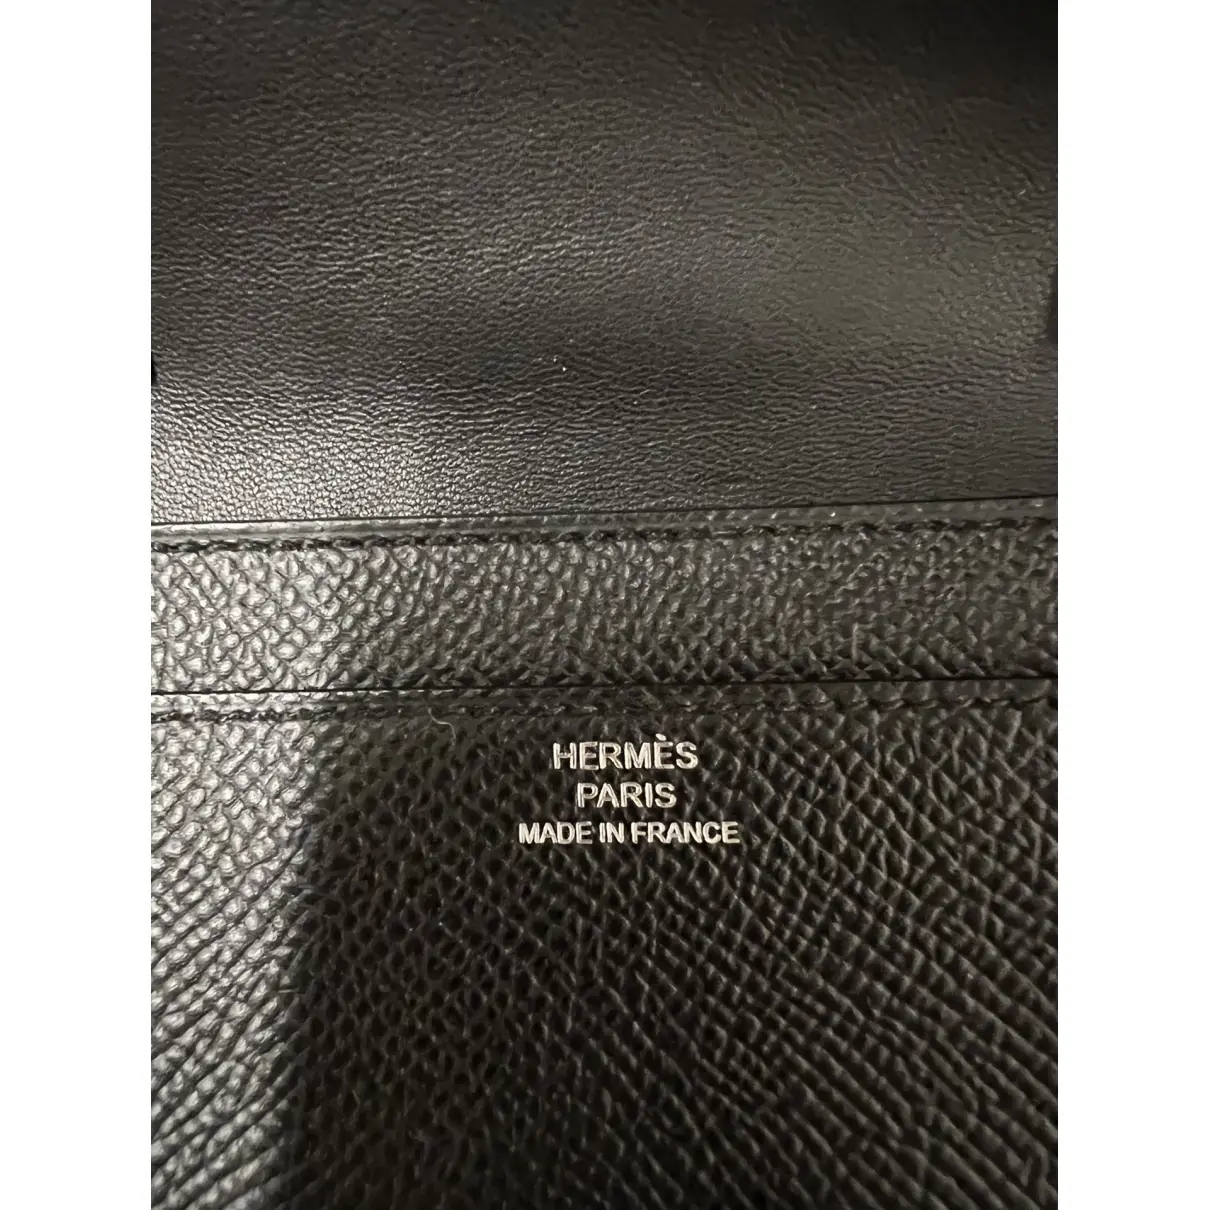 Buy Hermès Constance leather crossbody bag online